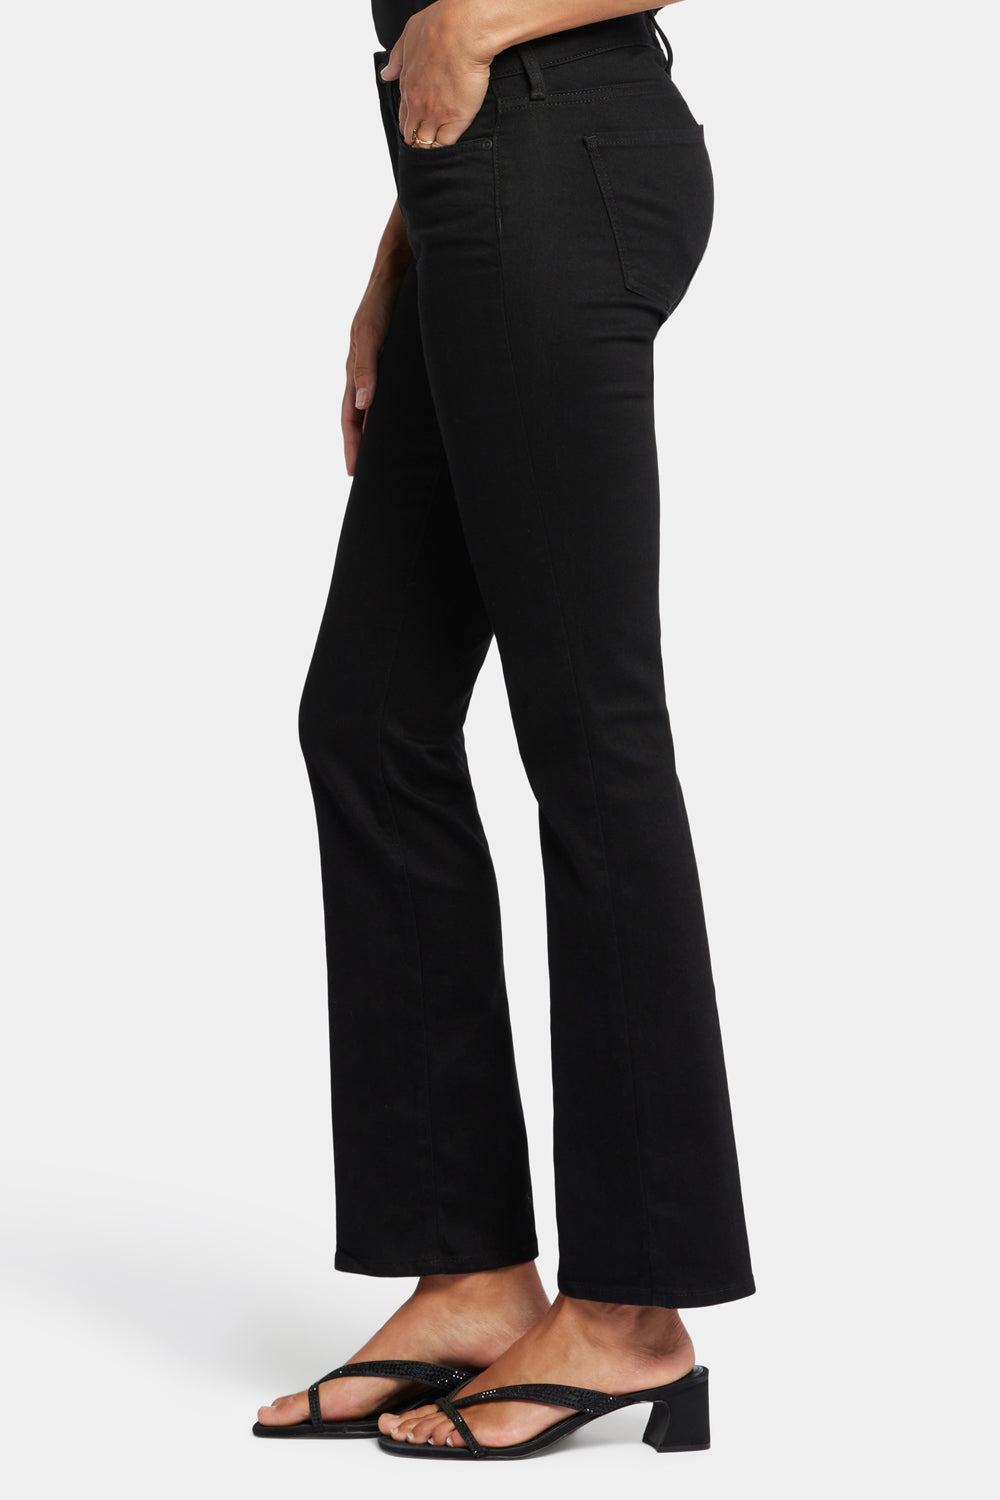 NYDJ Barbara Bootcut Jeans In Short Inseam  - Black